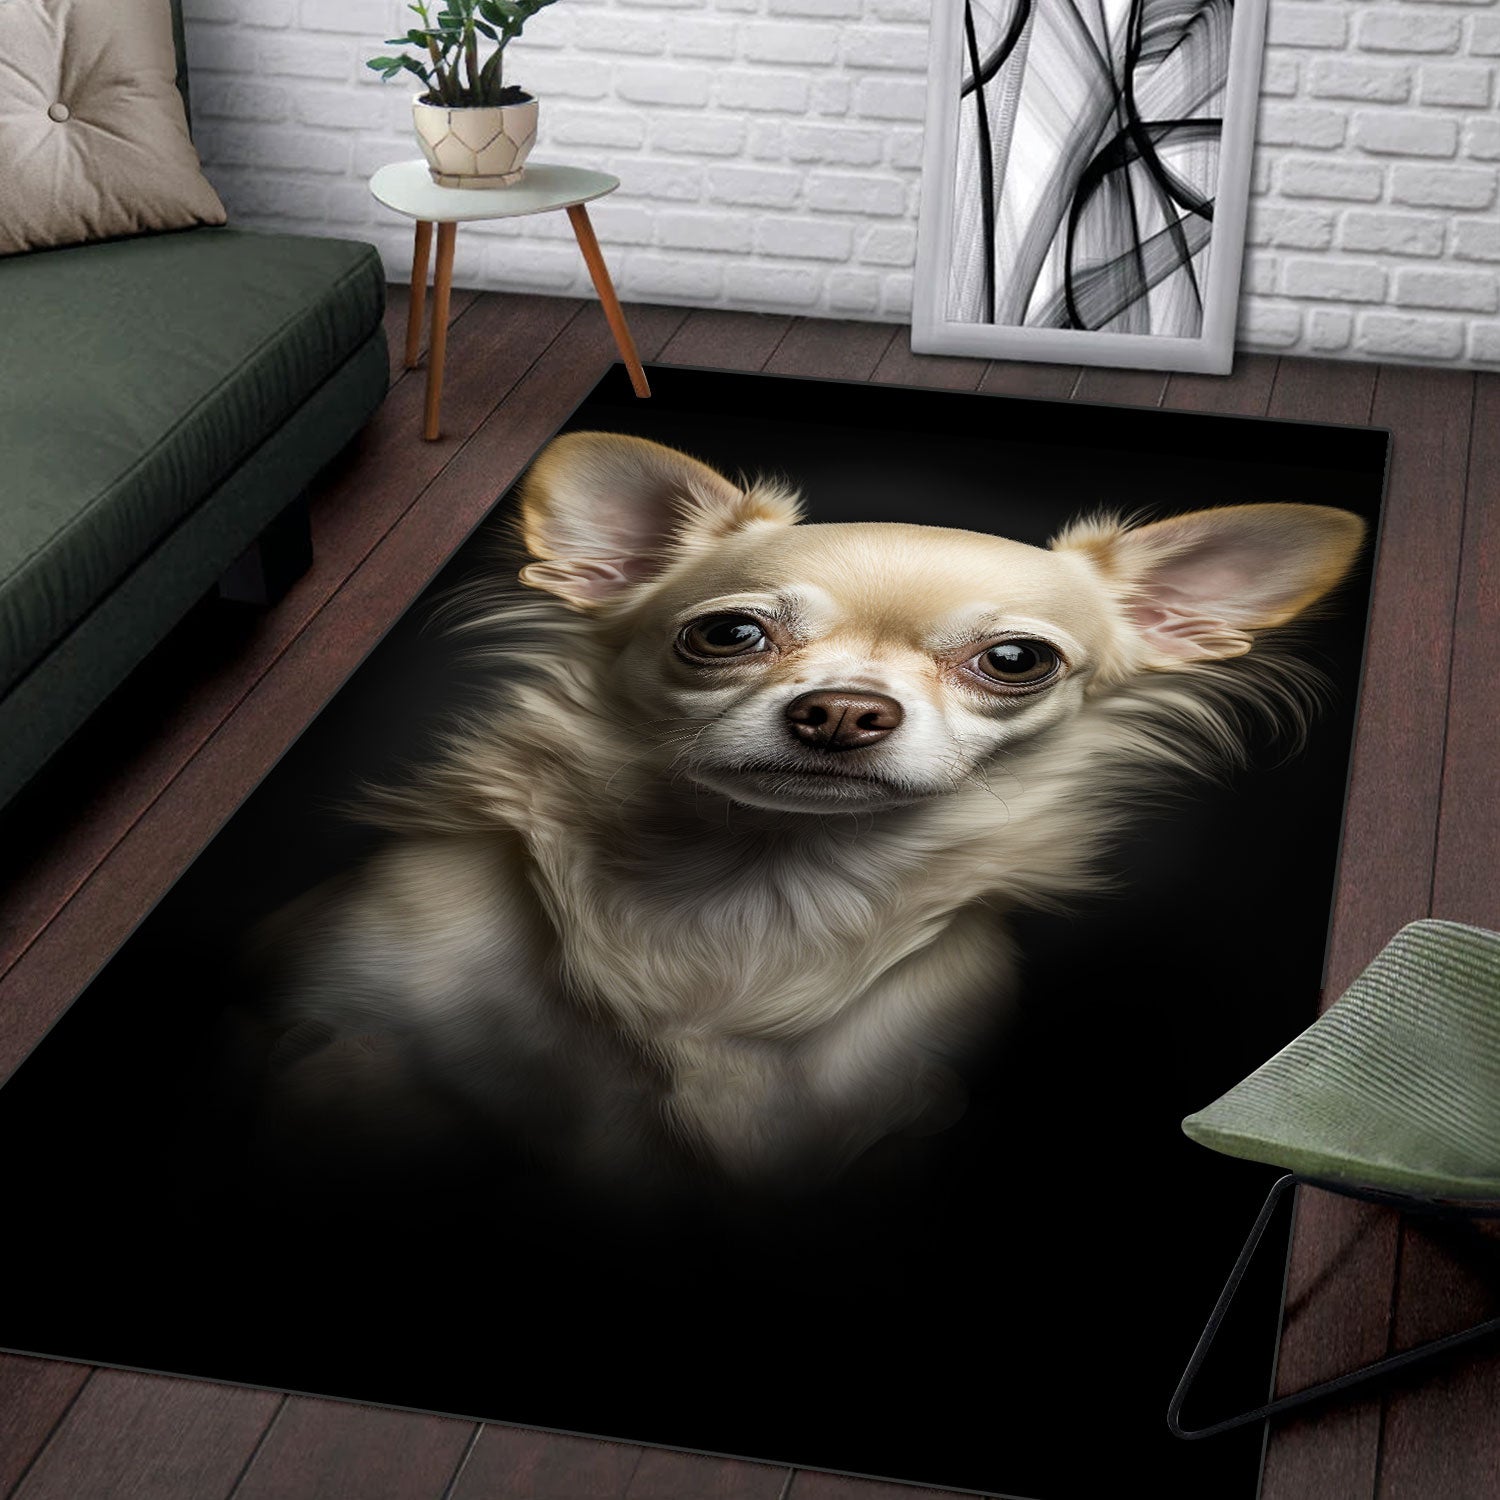 Chihuahua 2 3D Portrait Area Rug